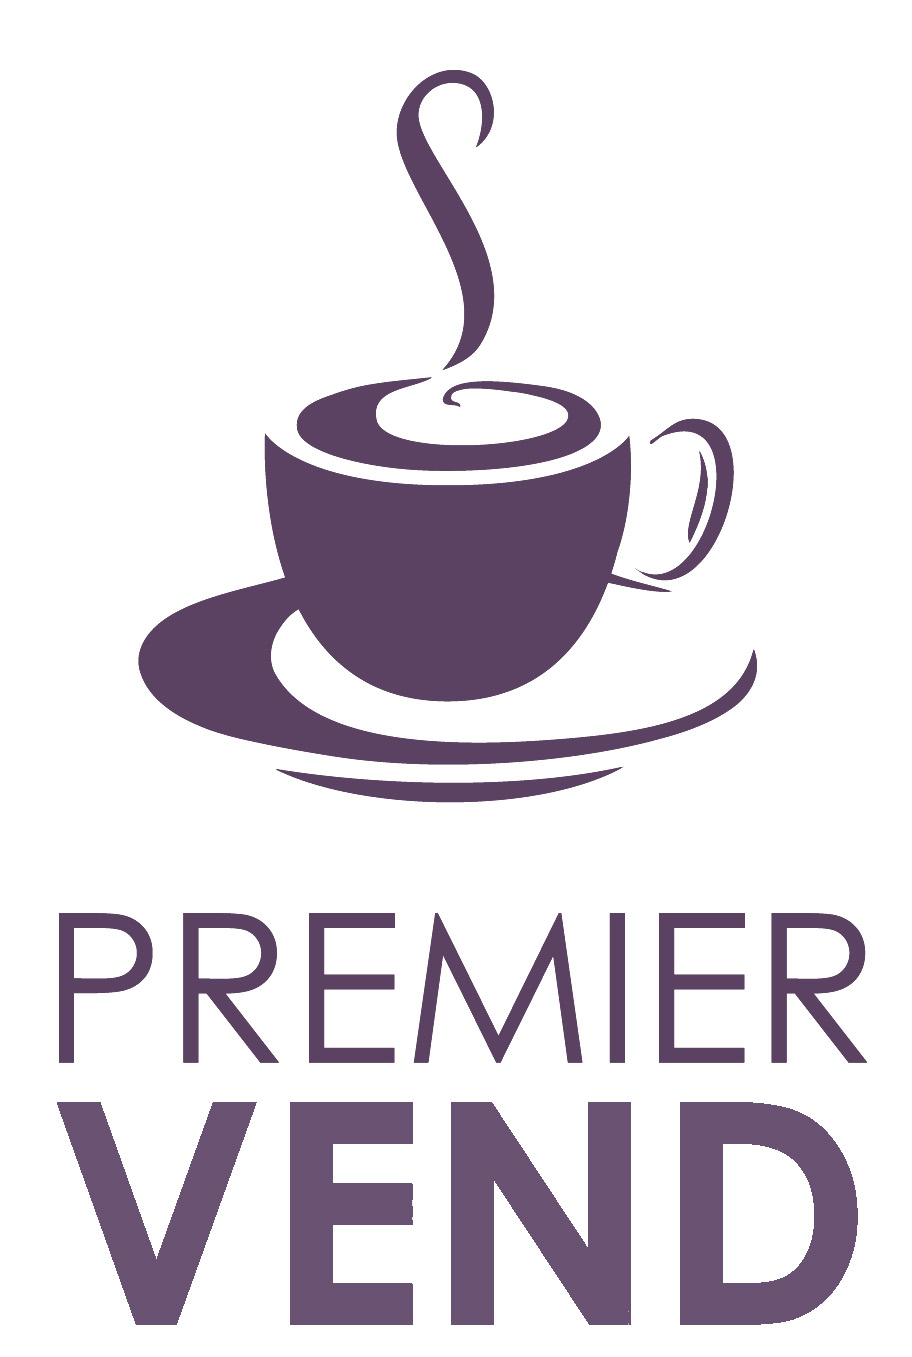 Premier Vend Ltd